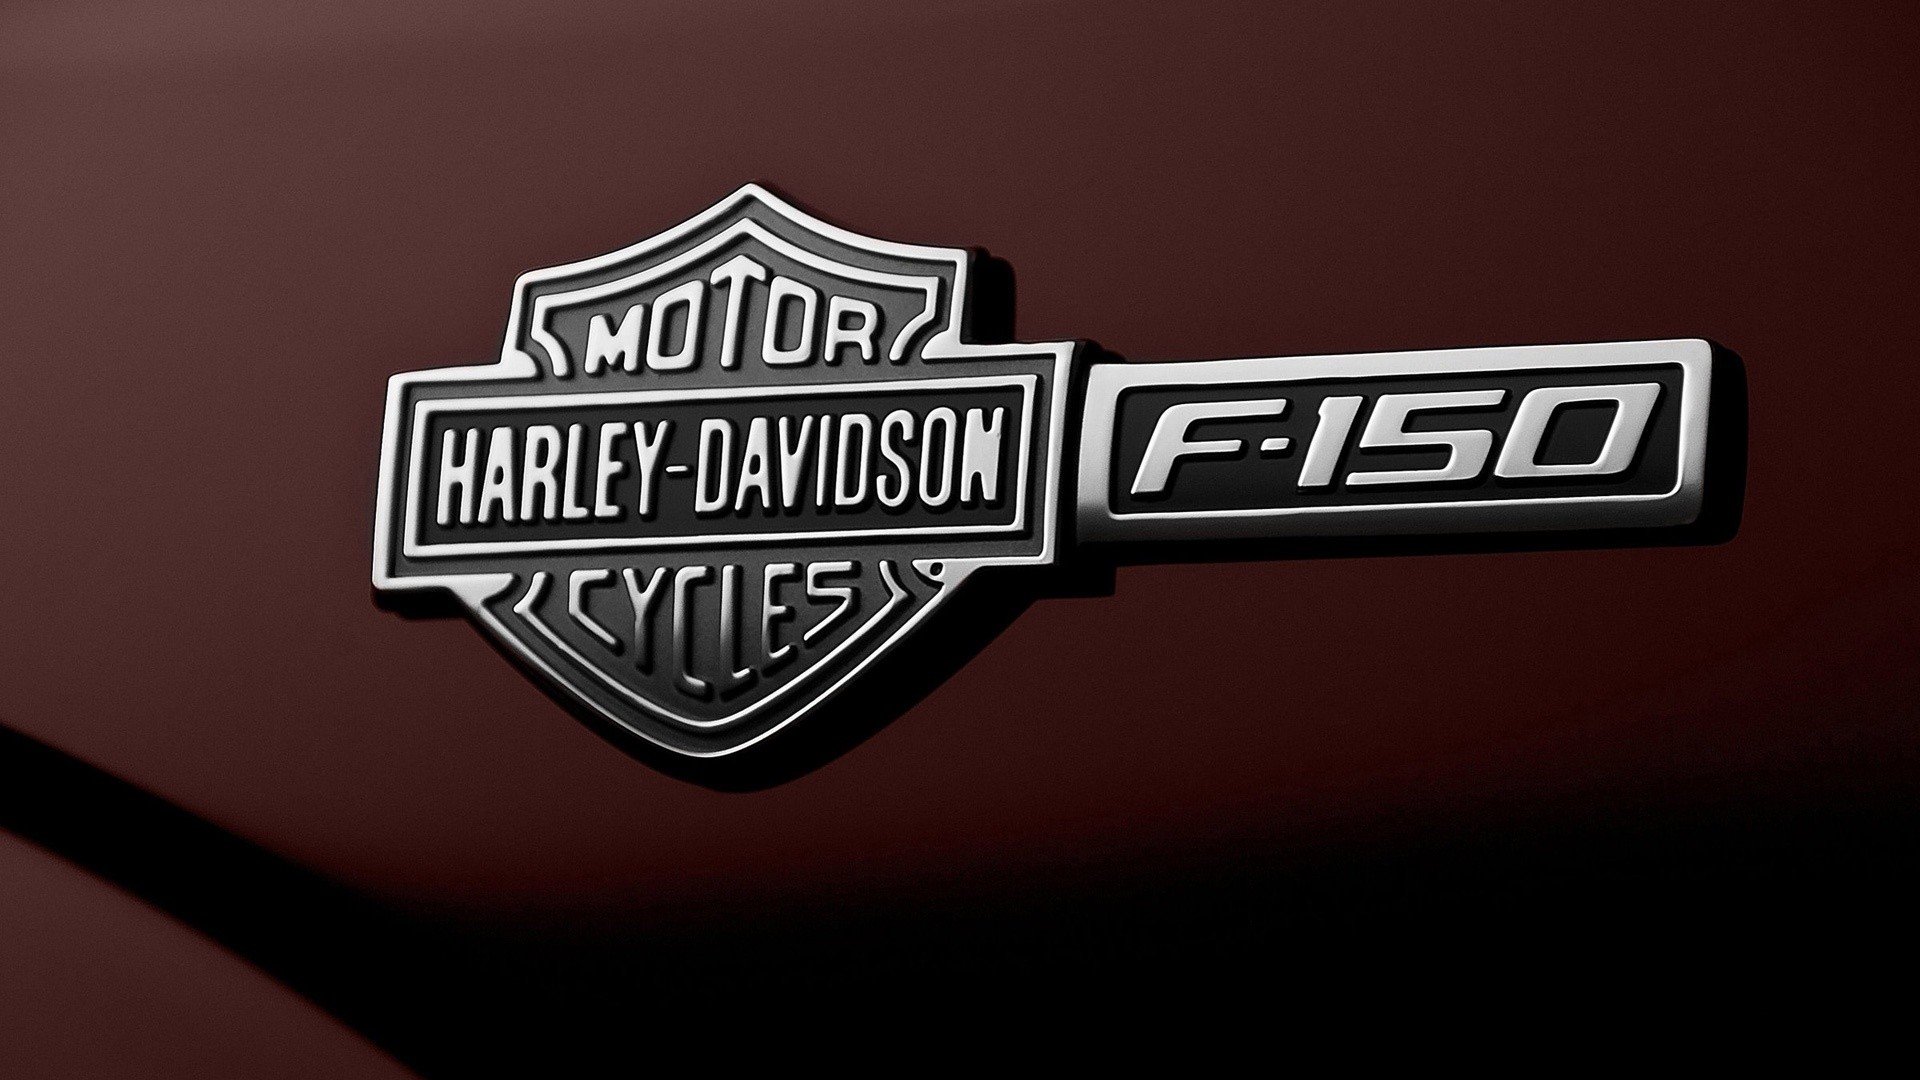  engines  Brands Motorbikes Logos  Harley Davidson 